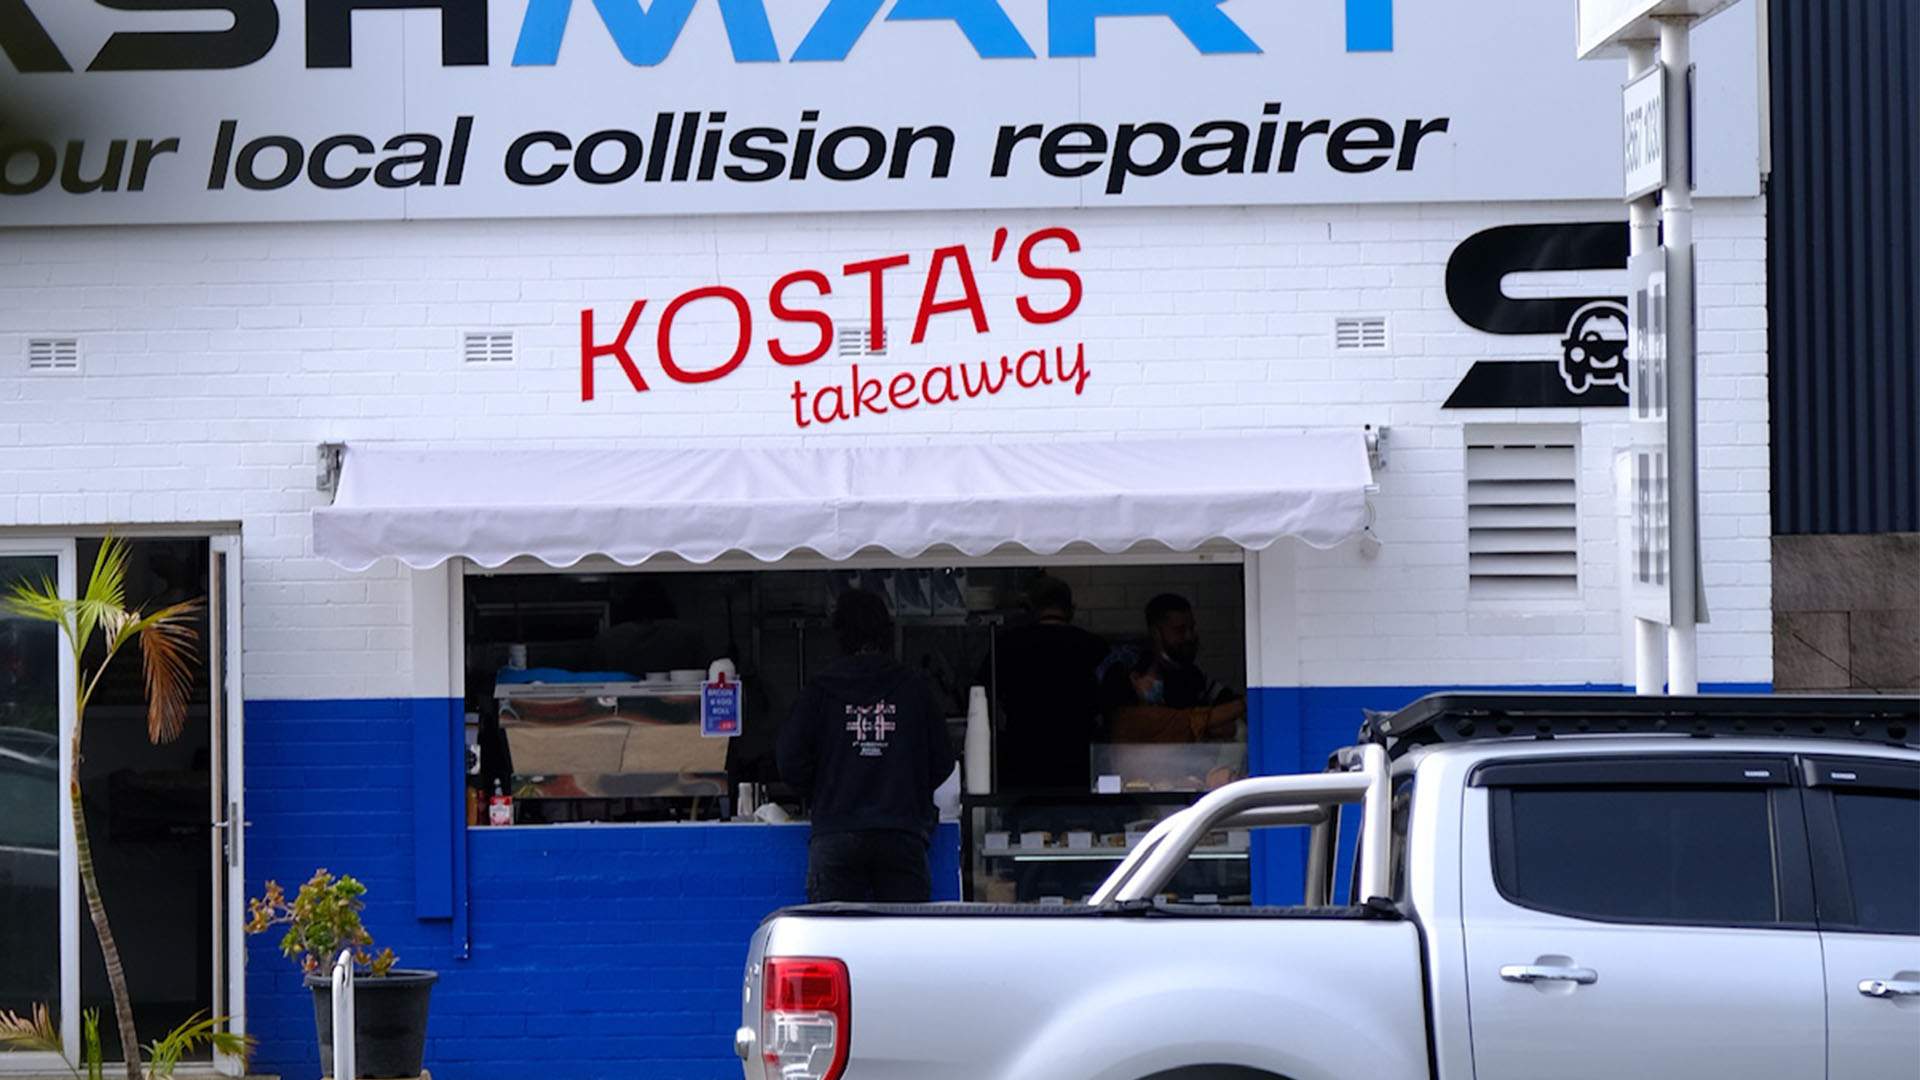 Kosta's Takeaway